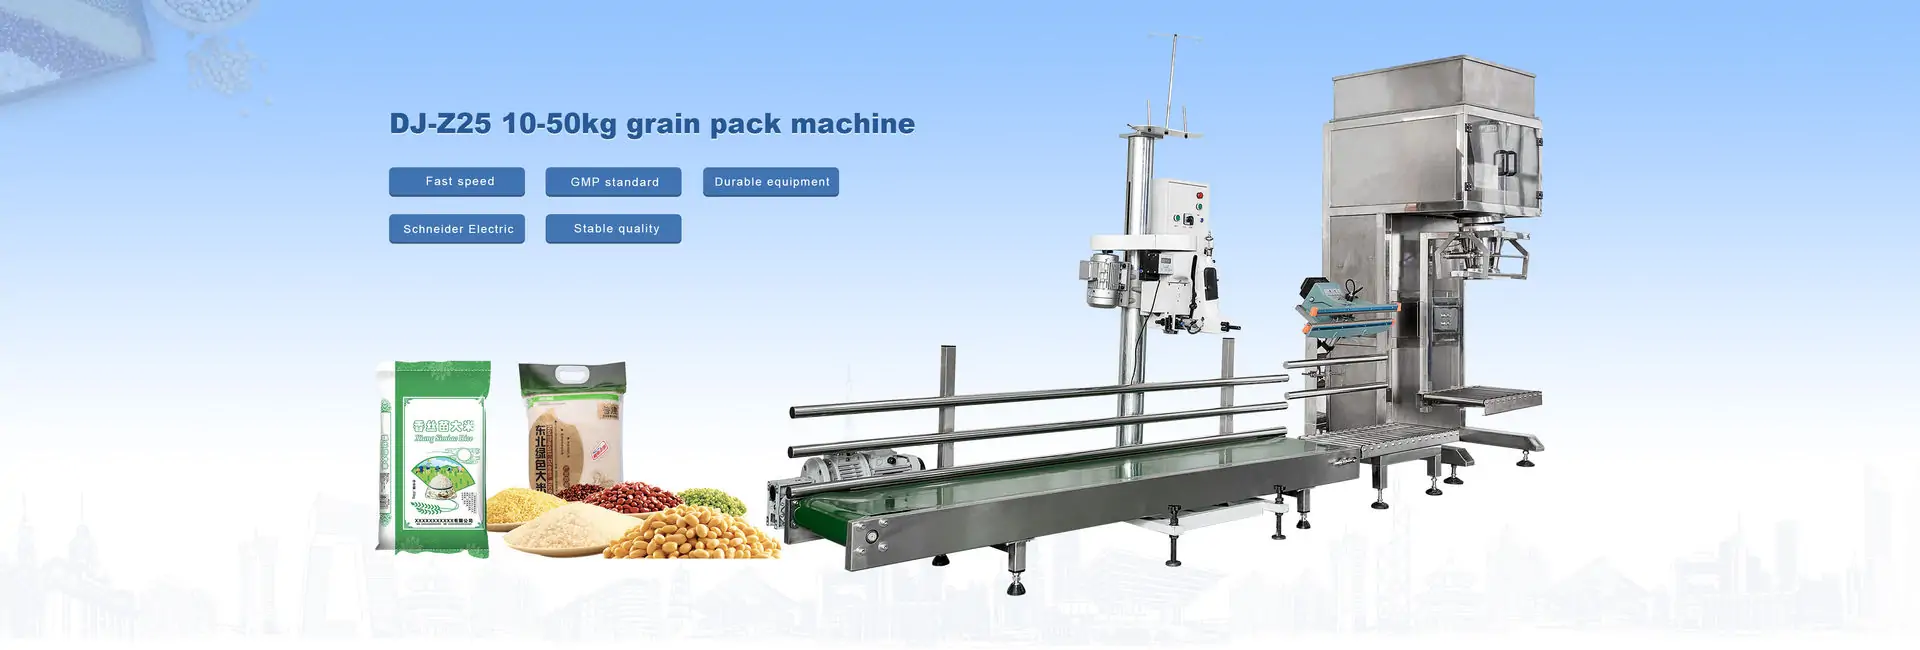 grain packaging equipment